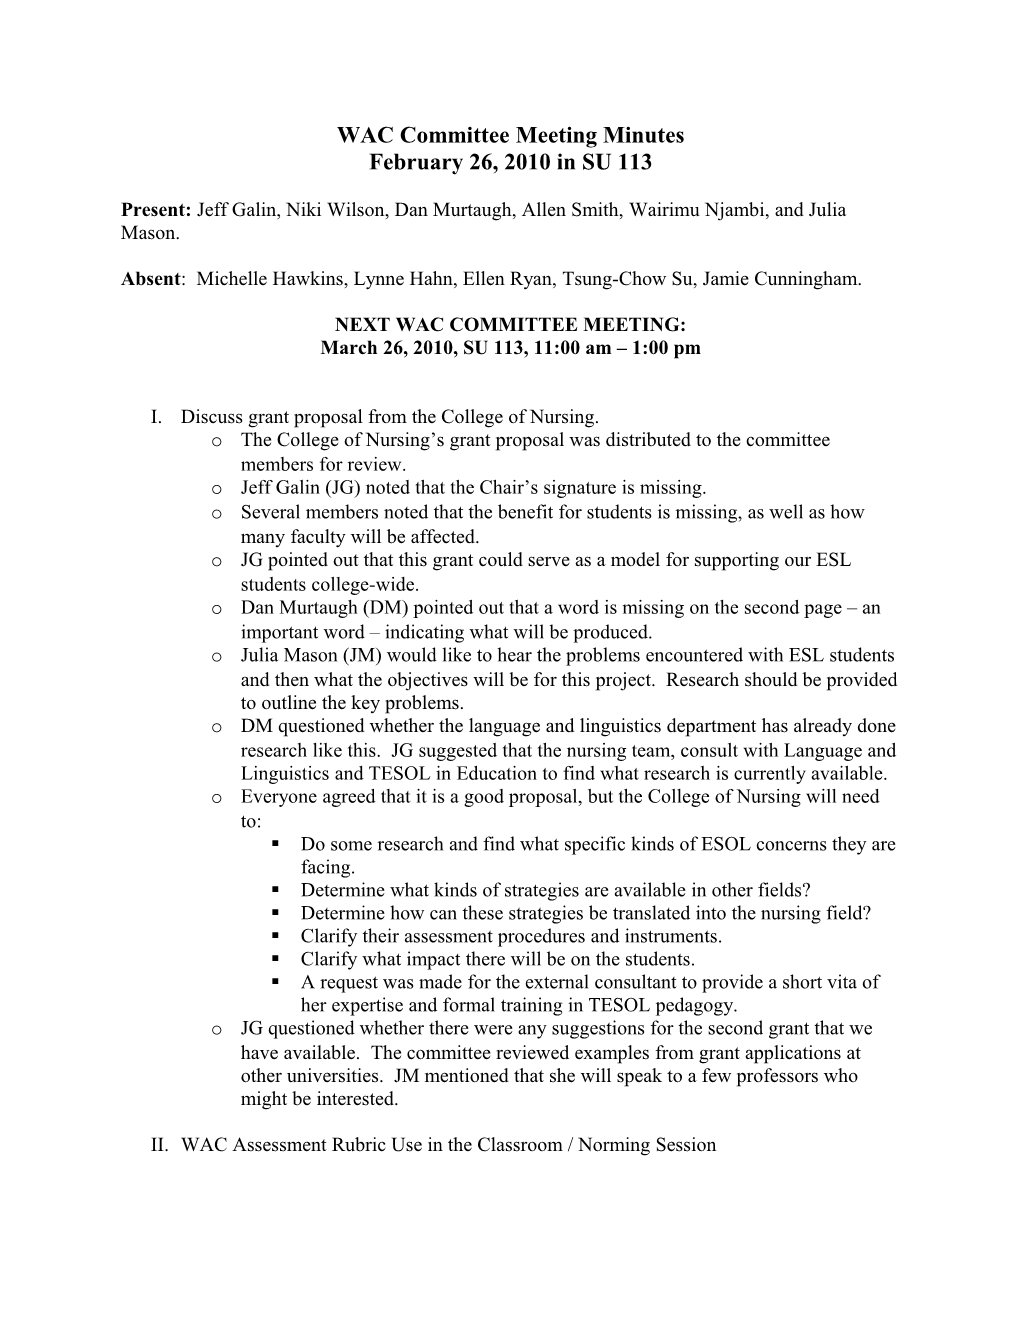 WAC Committee Meeting Minutes 10/24/08